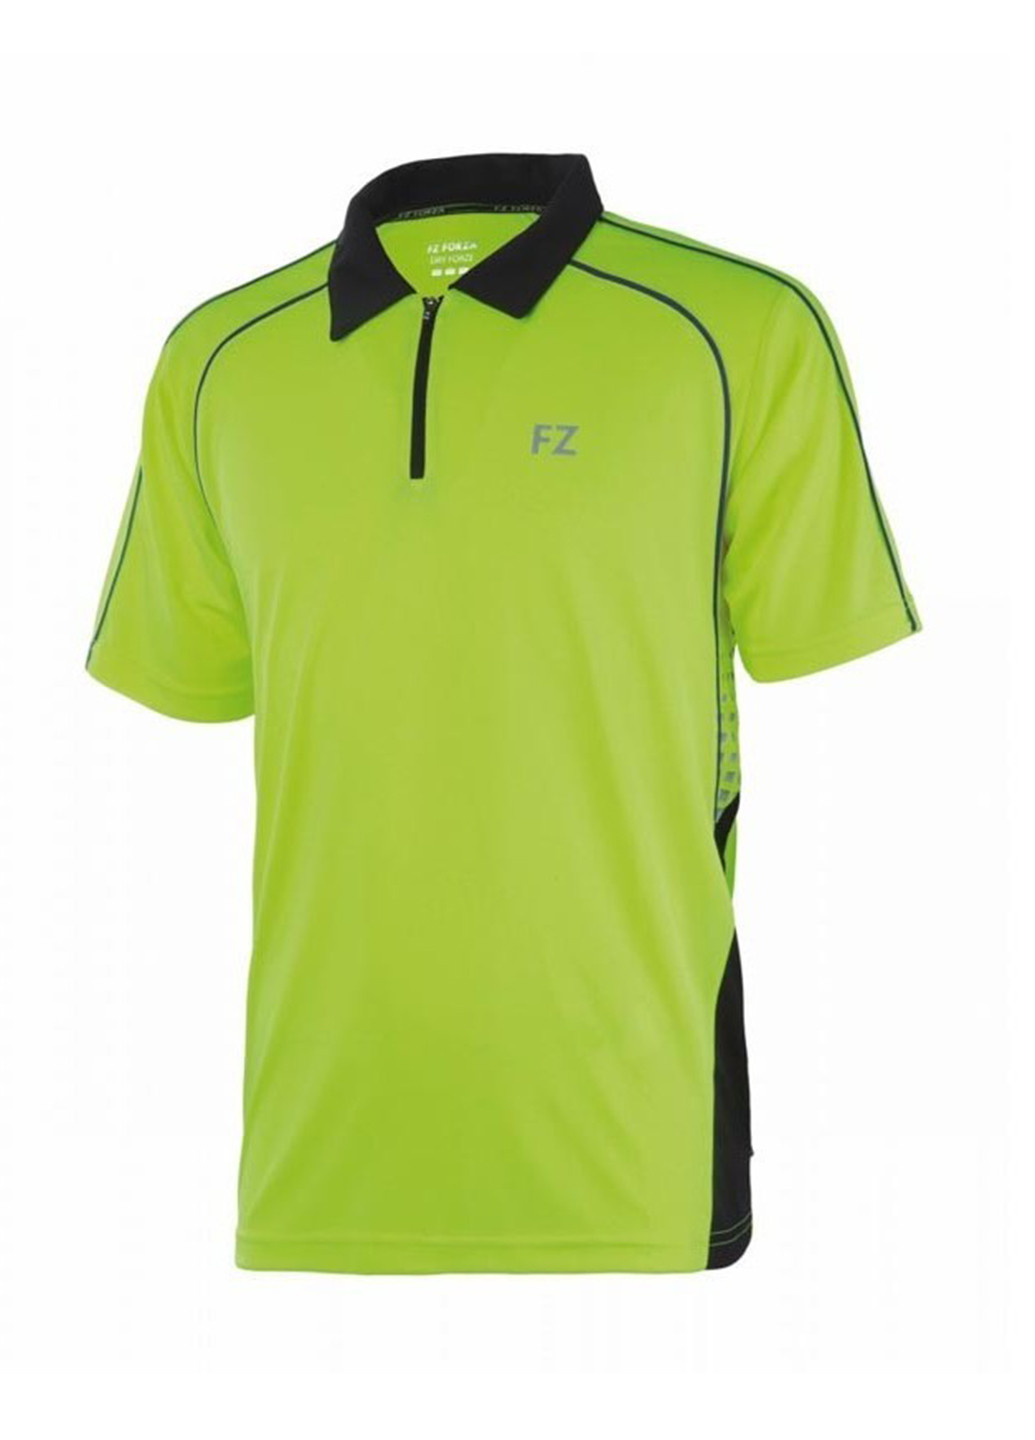 Салатовая футболка-поло для мужчин FZ Forza с логотипом